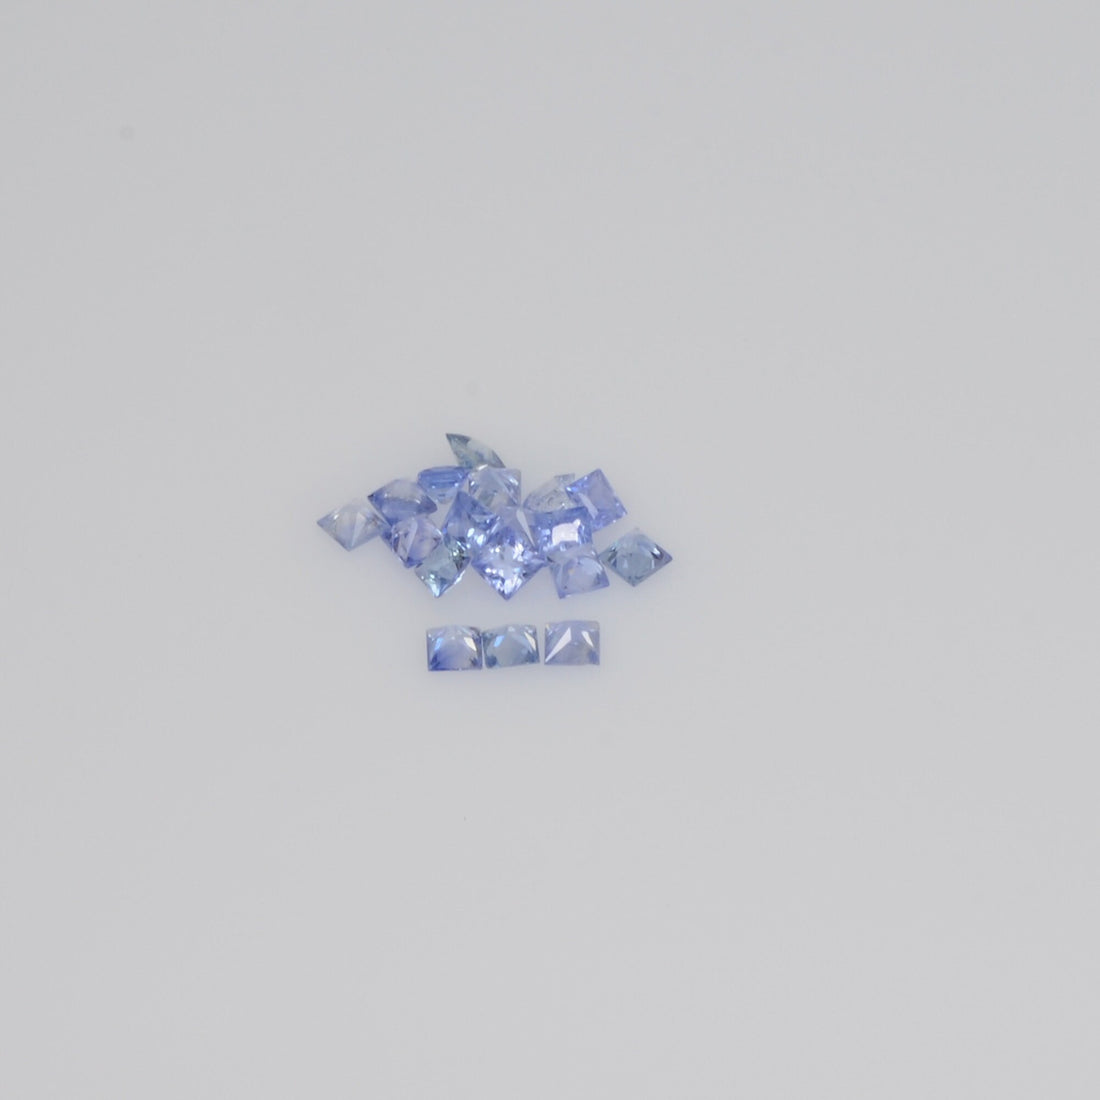 1.3-2.3 MM Natural Princess Cut Blue Sapphire Loose Gemstone